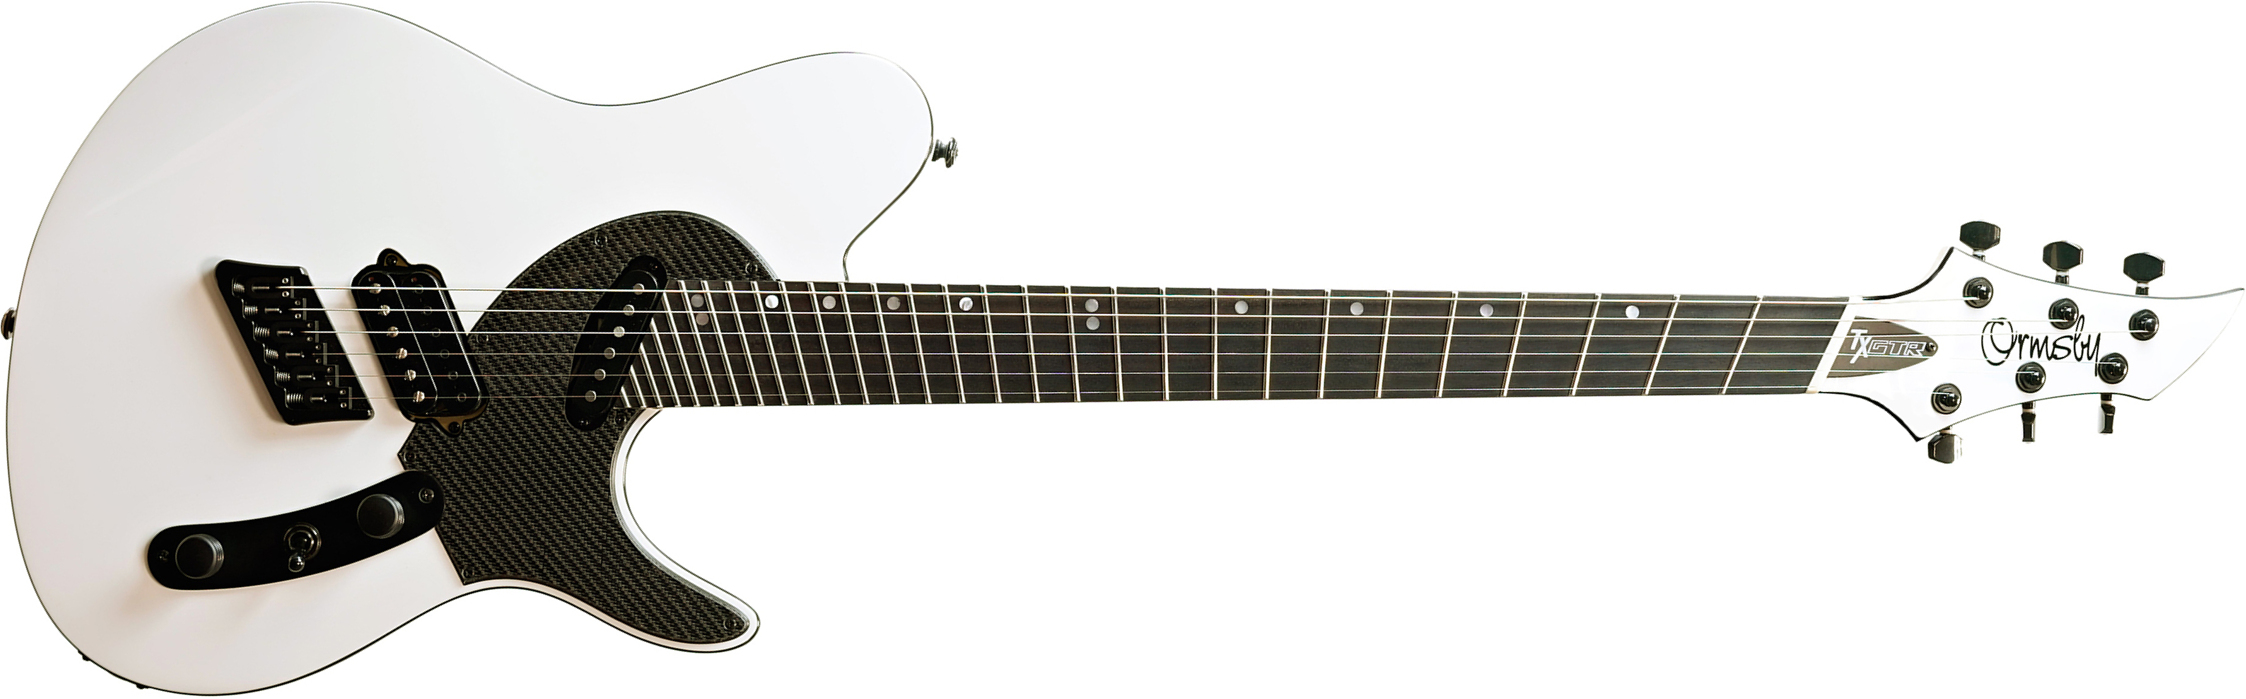 Ormsby Tx Gtr Carbon 6c Multiscale Hs Ht Eb - Ermine White - Televorm elektrische gitaar - Main picture